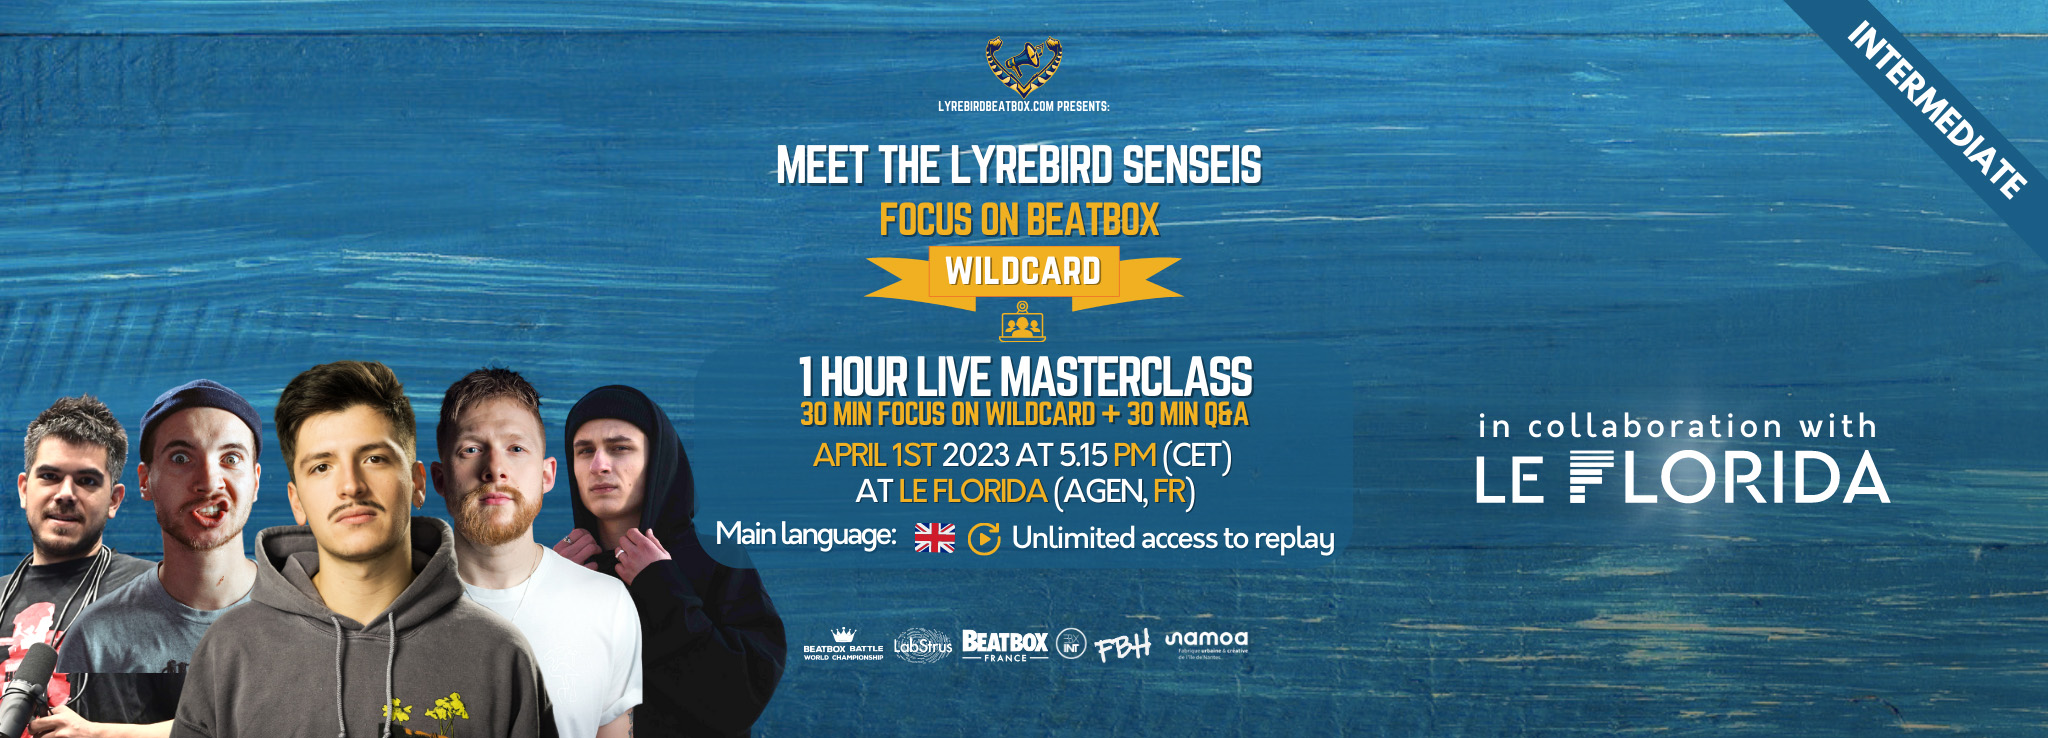 Meet the Lyrebird senseis - Focus on beatbox wildcard @ Le Florida 2023